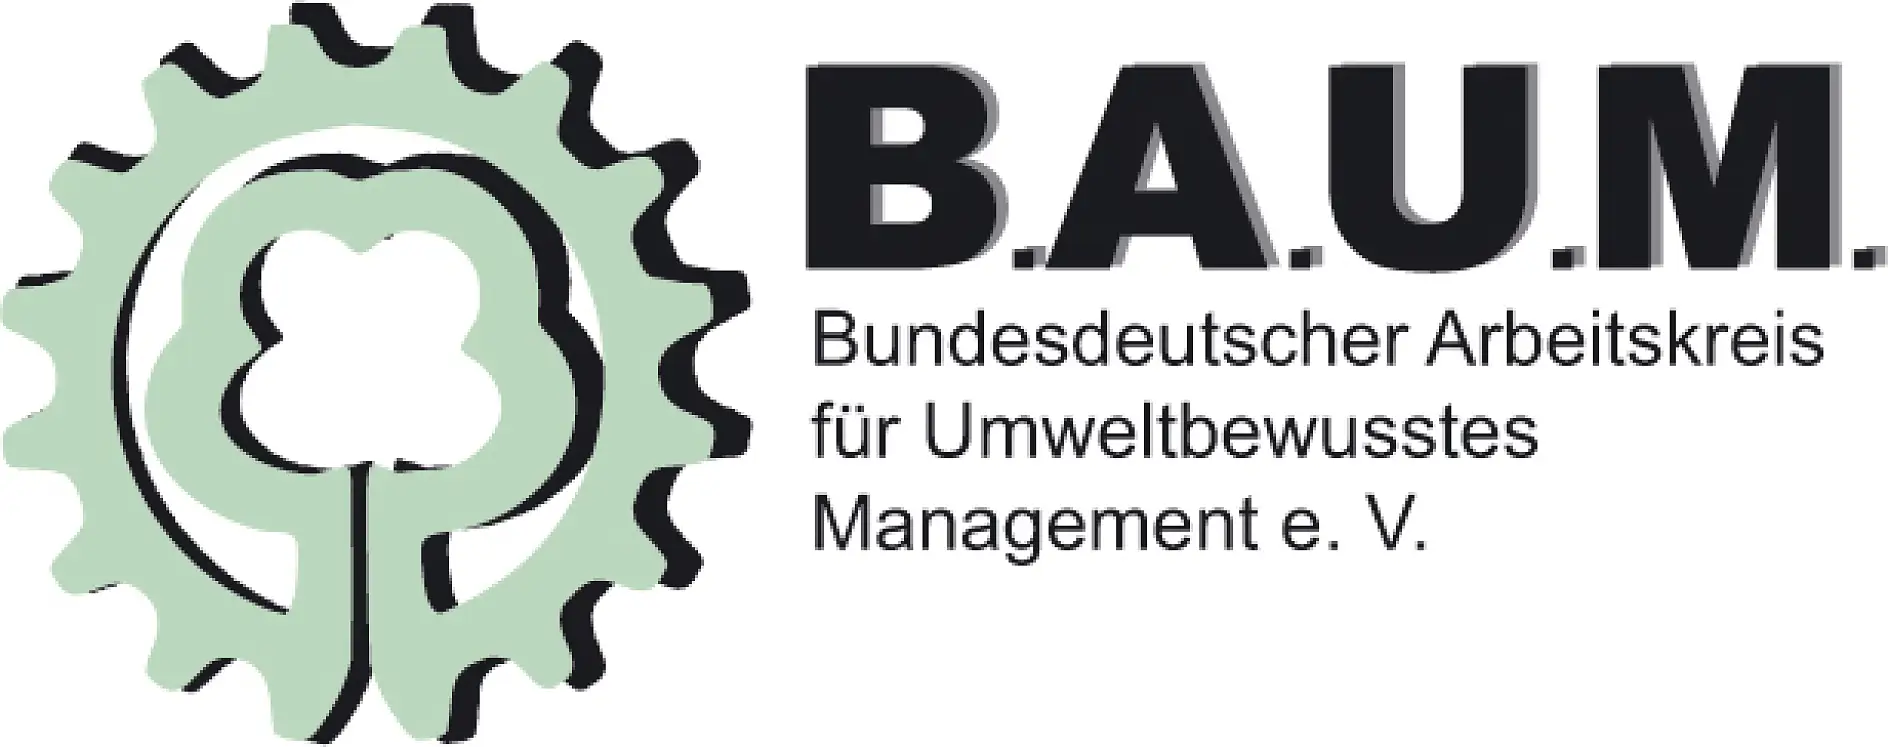 BAUM: Bundesdeutscher Arbeitskreis Umweltbewusstes Management e.V. (ชมรมการบริหารจัดการอย่างตระหนักถึงสิ่งแวดล้อมแห่งเยอรมันสหพันธรัฐ สมาคมจดทะเบียน)